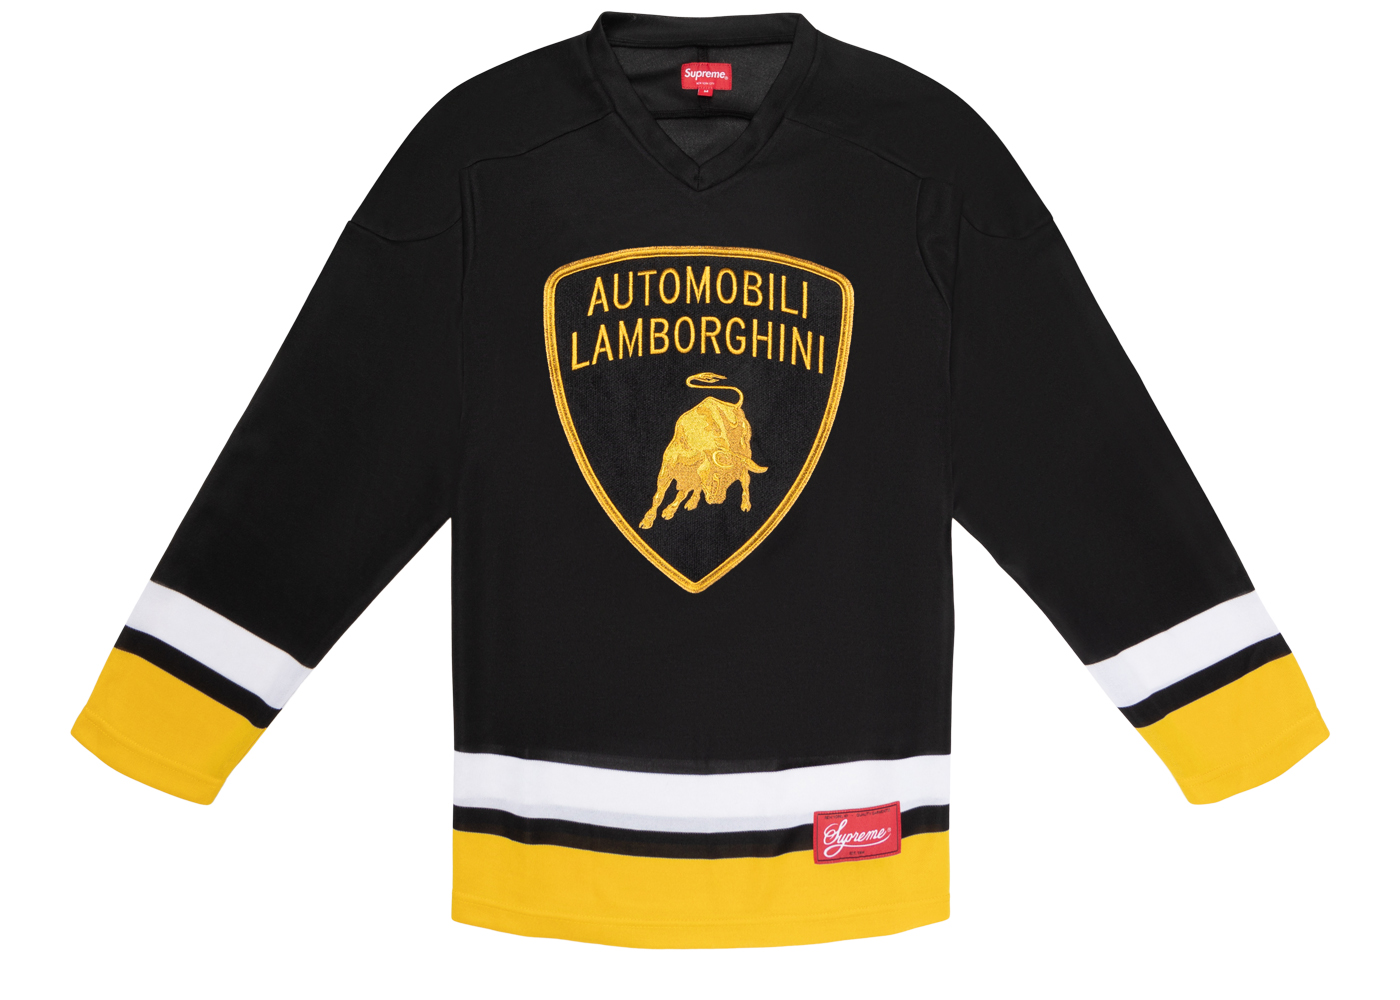 Supreme Automobili Lamborghini Hockey Jersey Black - SS20 Men's - US